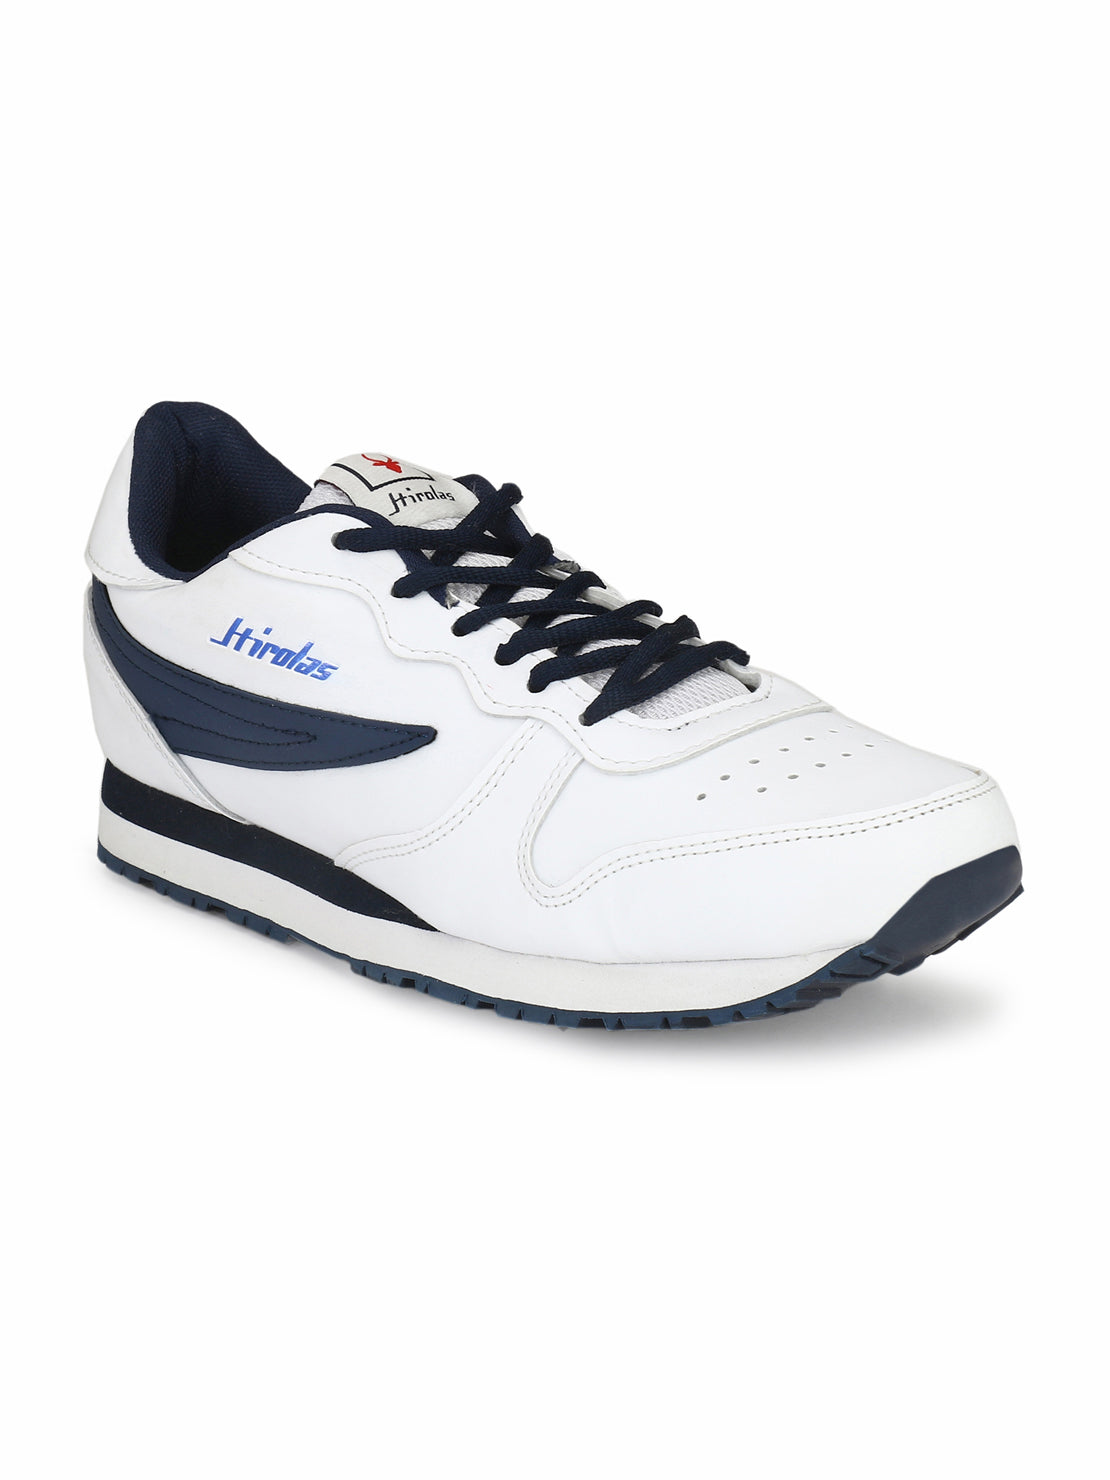 Hirolas® Men's White Multisports Lace Up Sneaker Sport Shoes (HRL1953WHT)